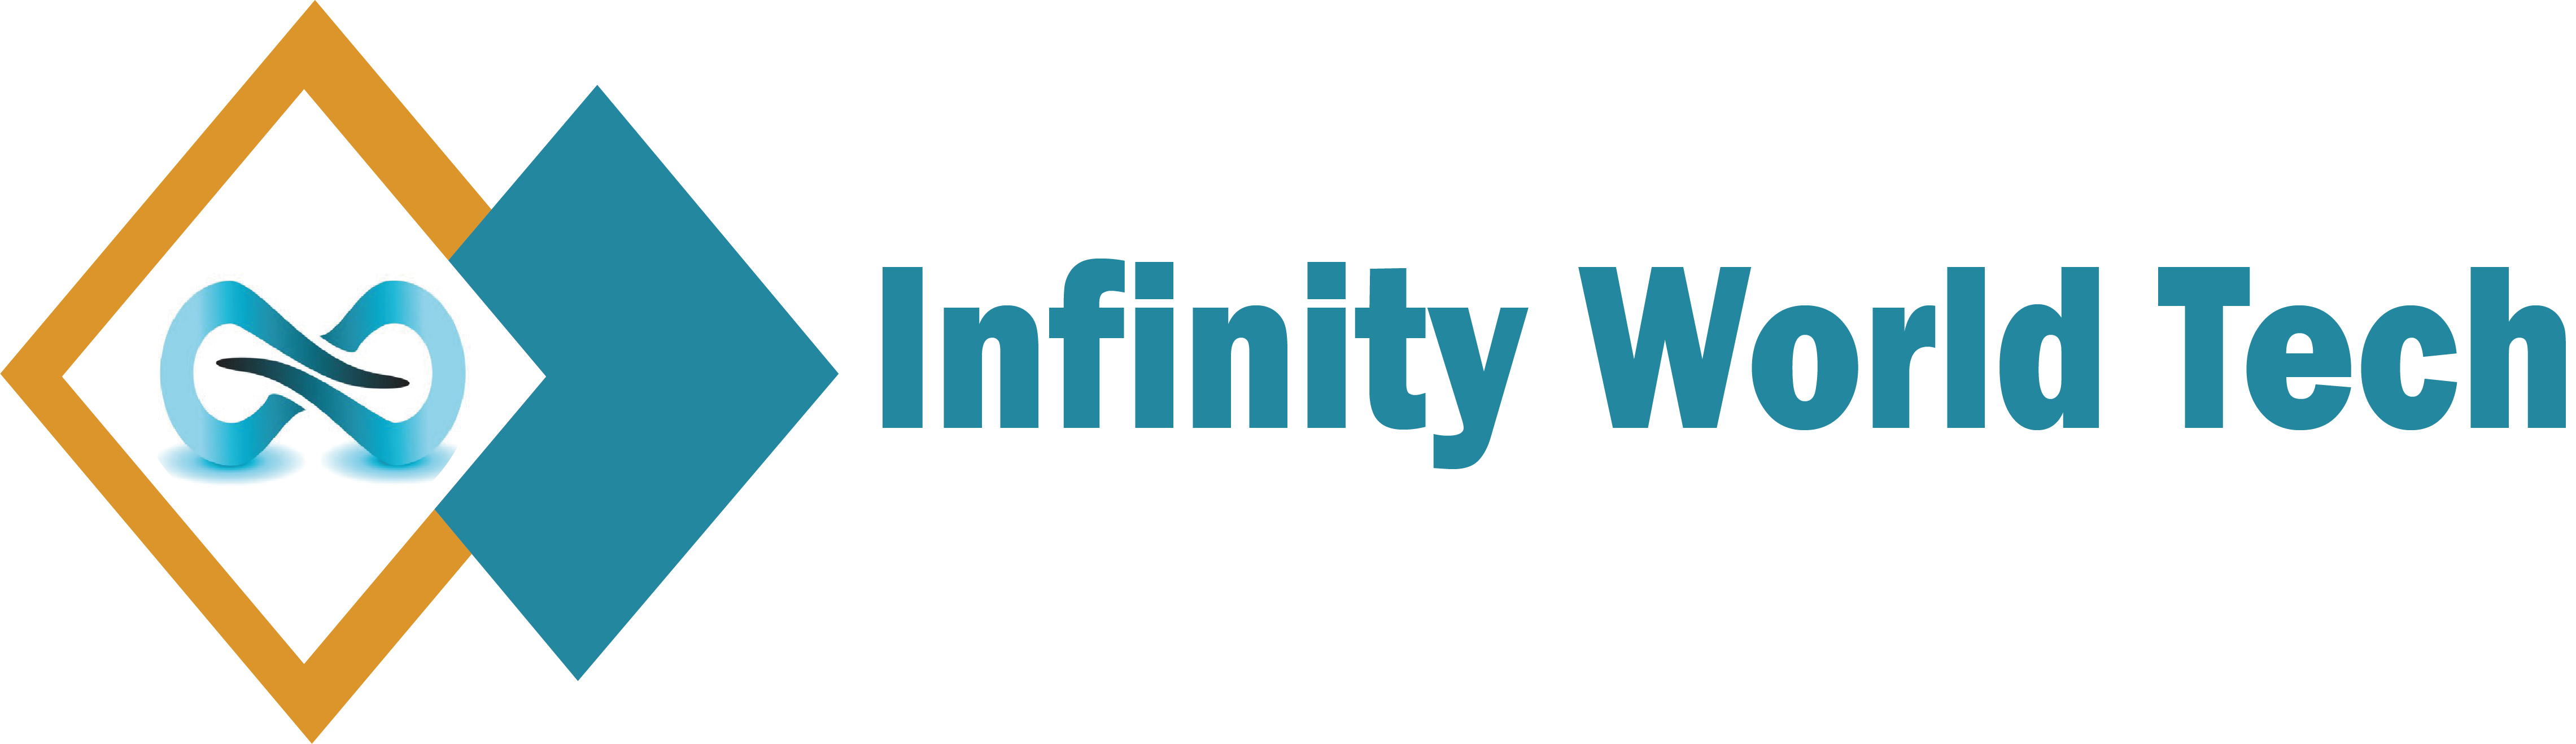 Infinity World Tech